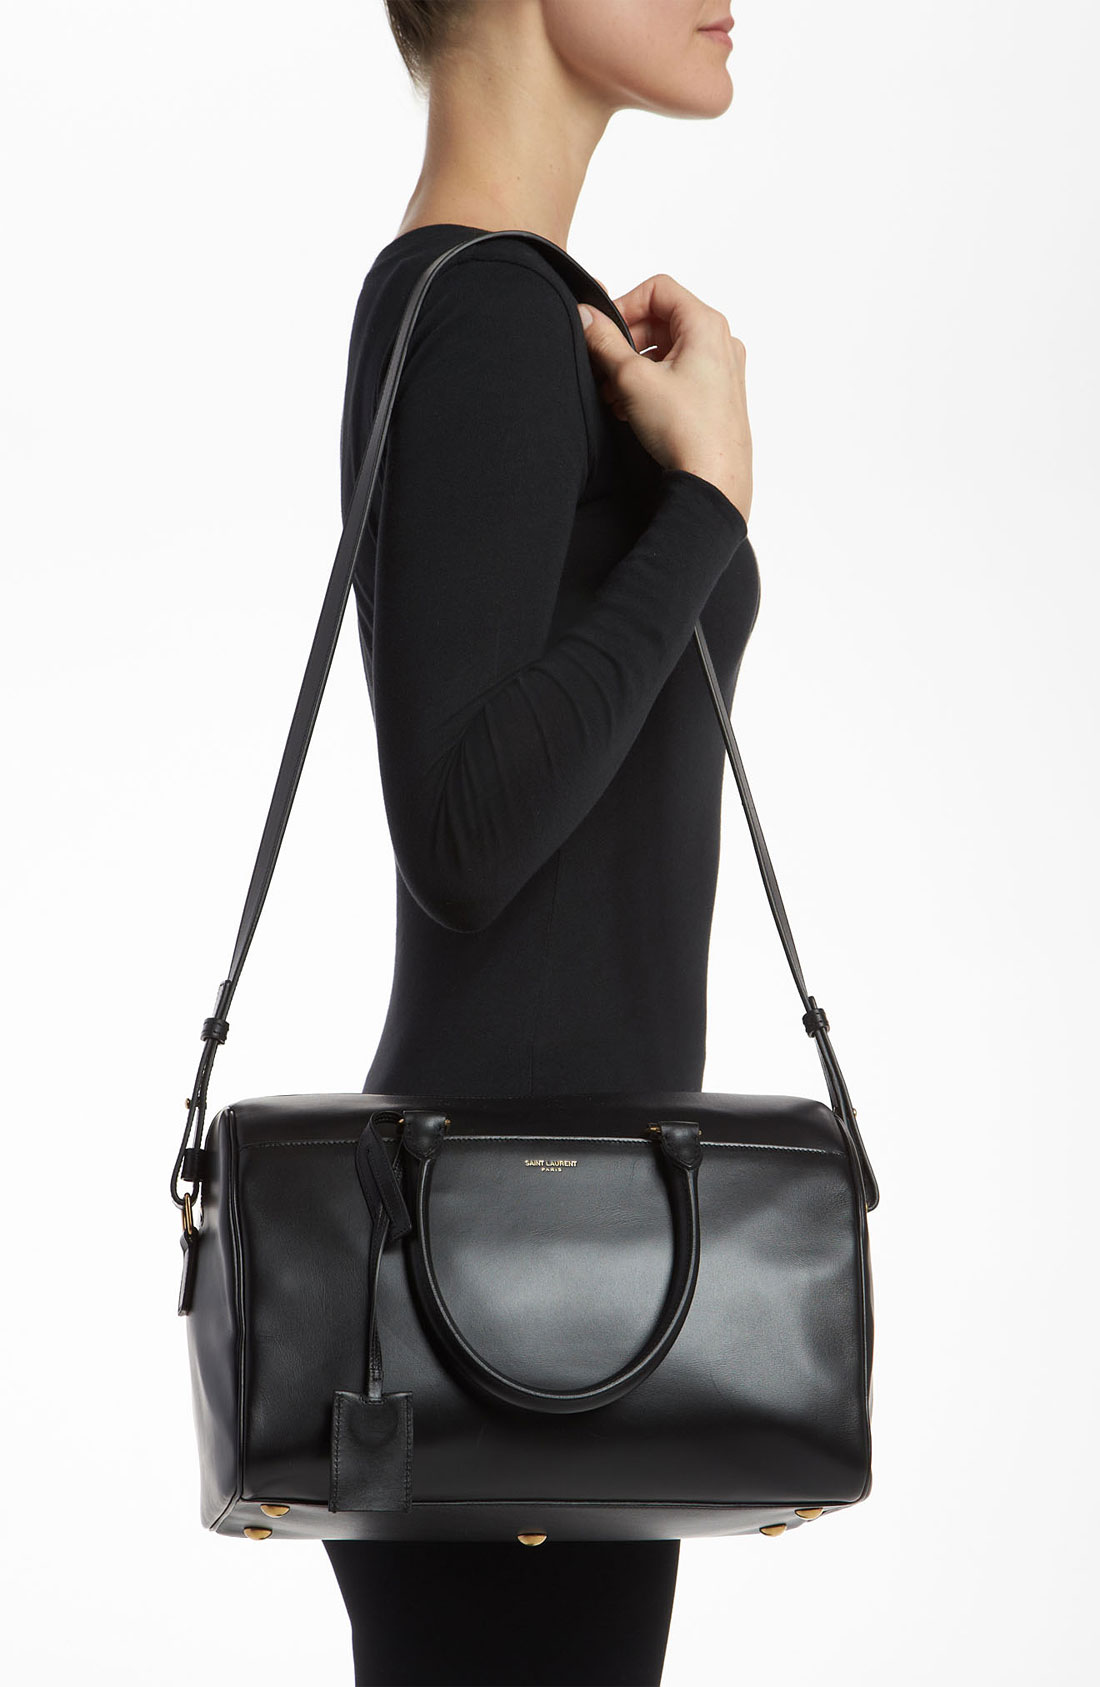 saint laurent shopping bag - small duffel saint laurent bag, black